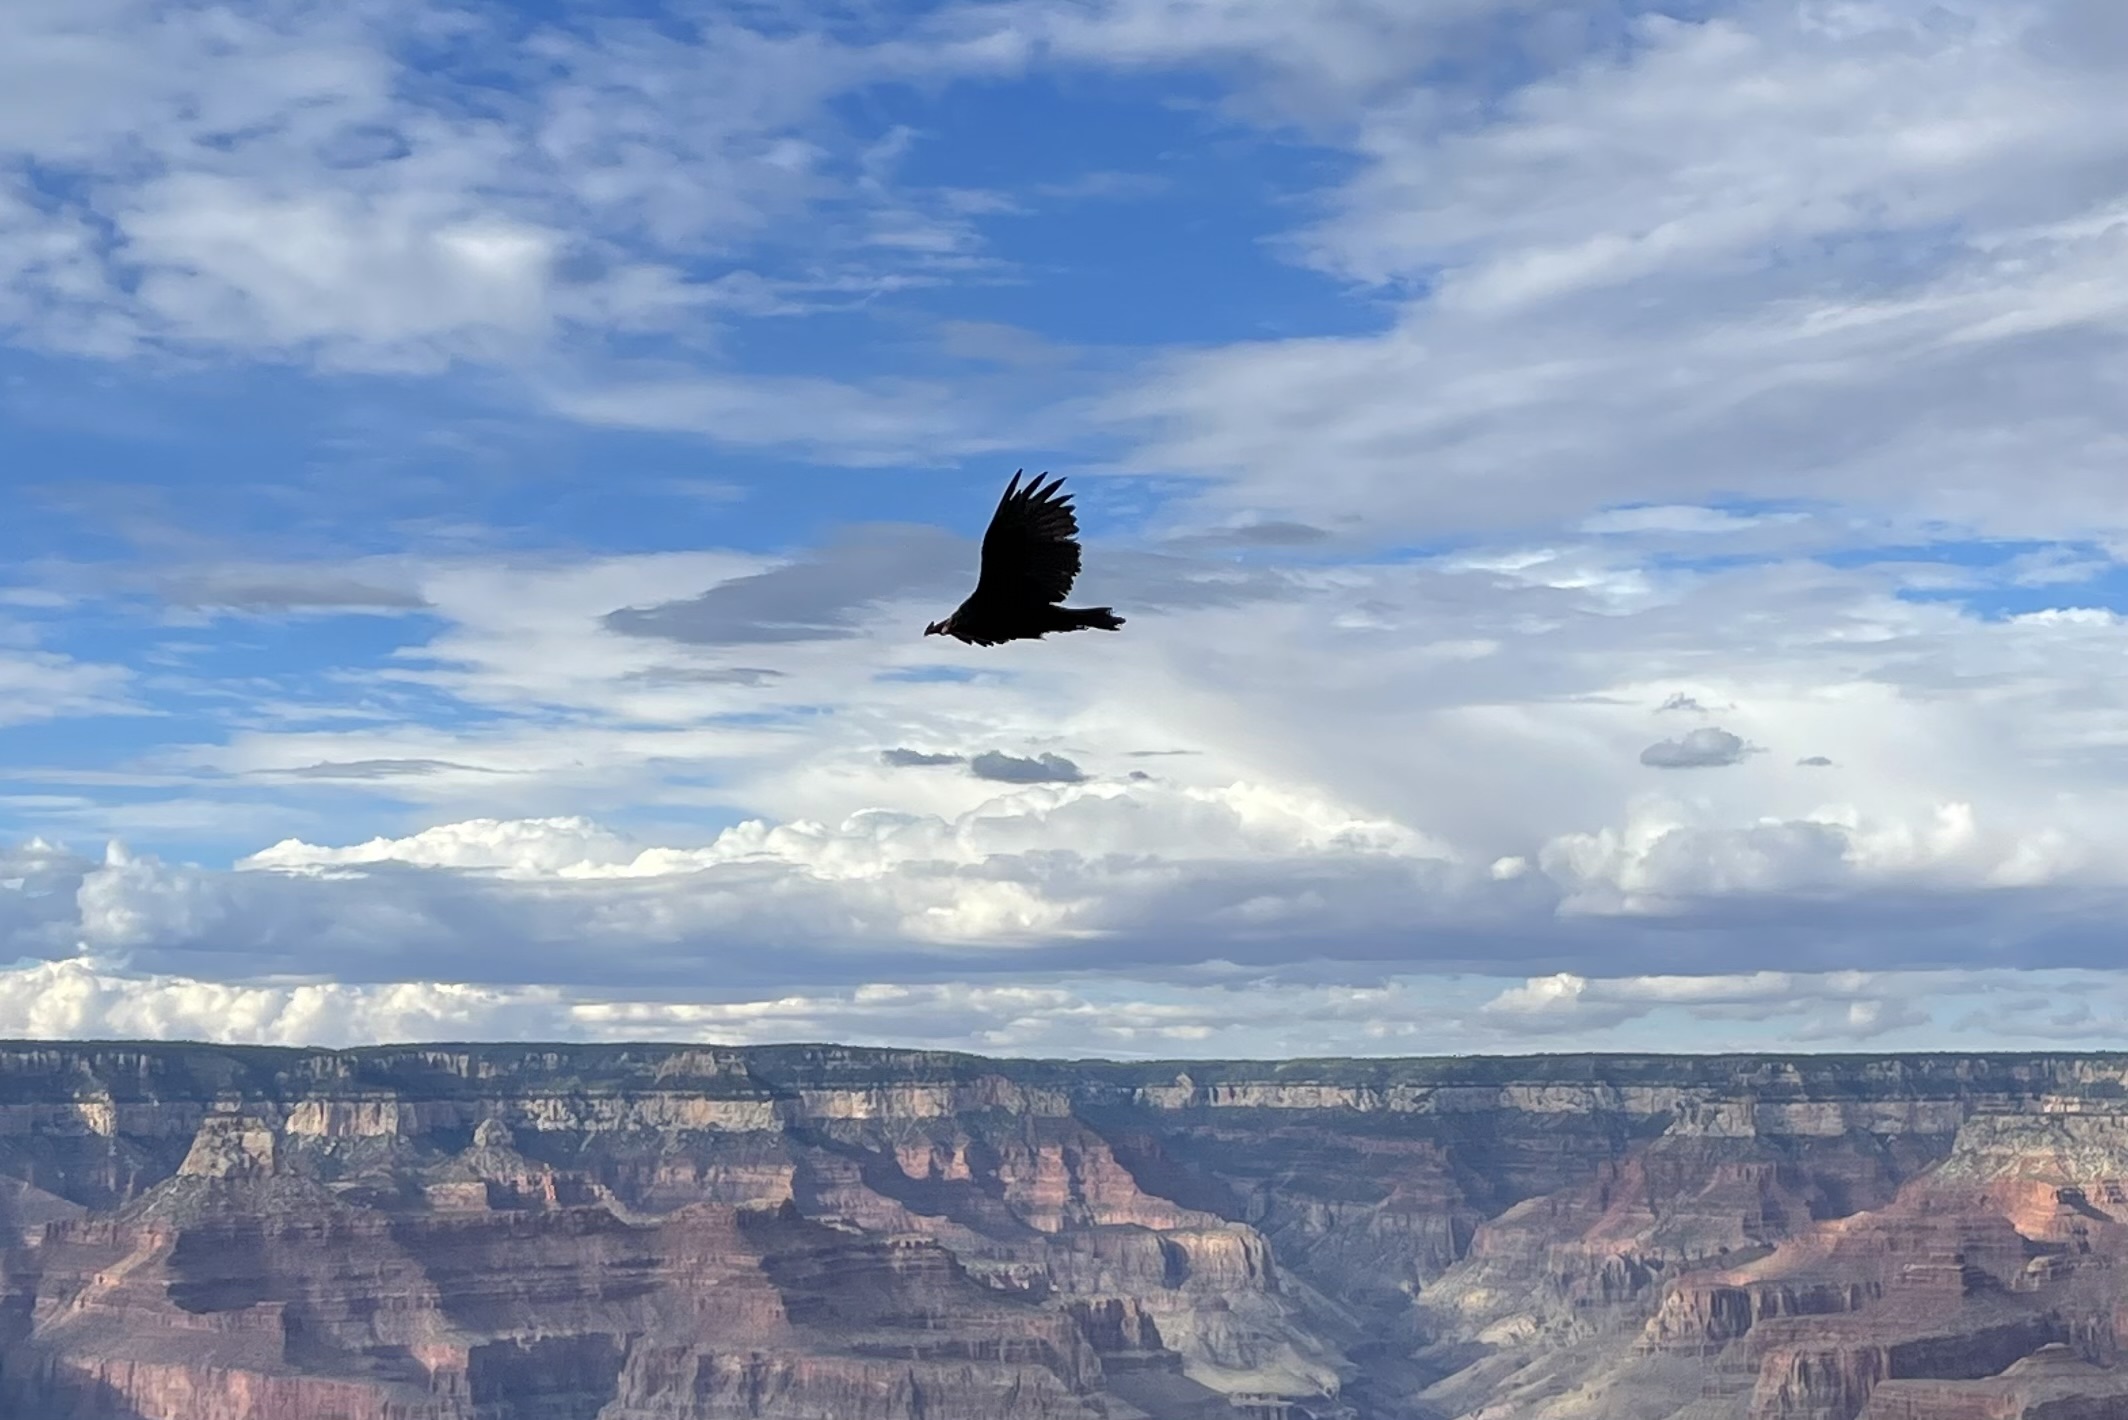 Photo by Donna  Burge  |  California Condor soaring over Grand Canyon South Rim